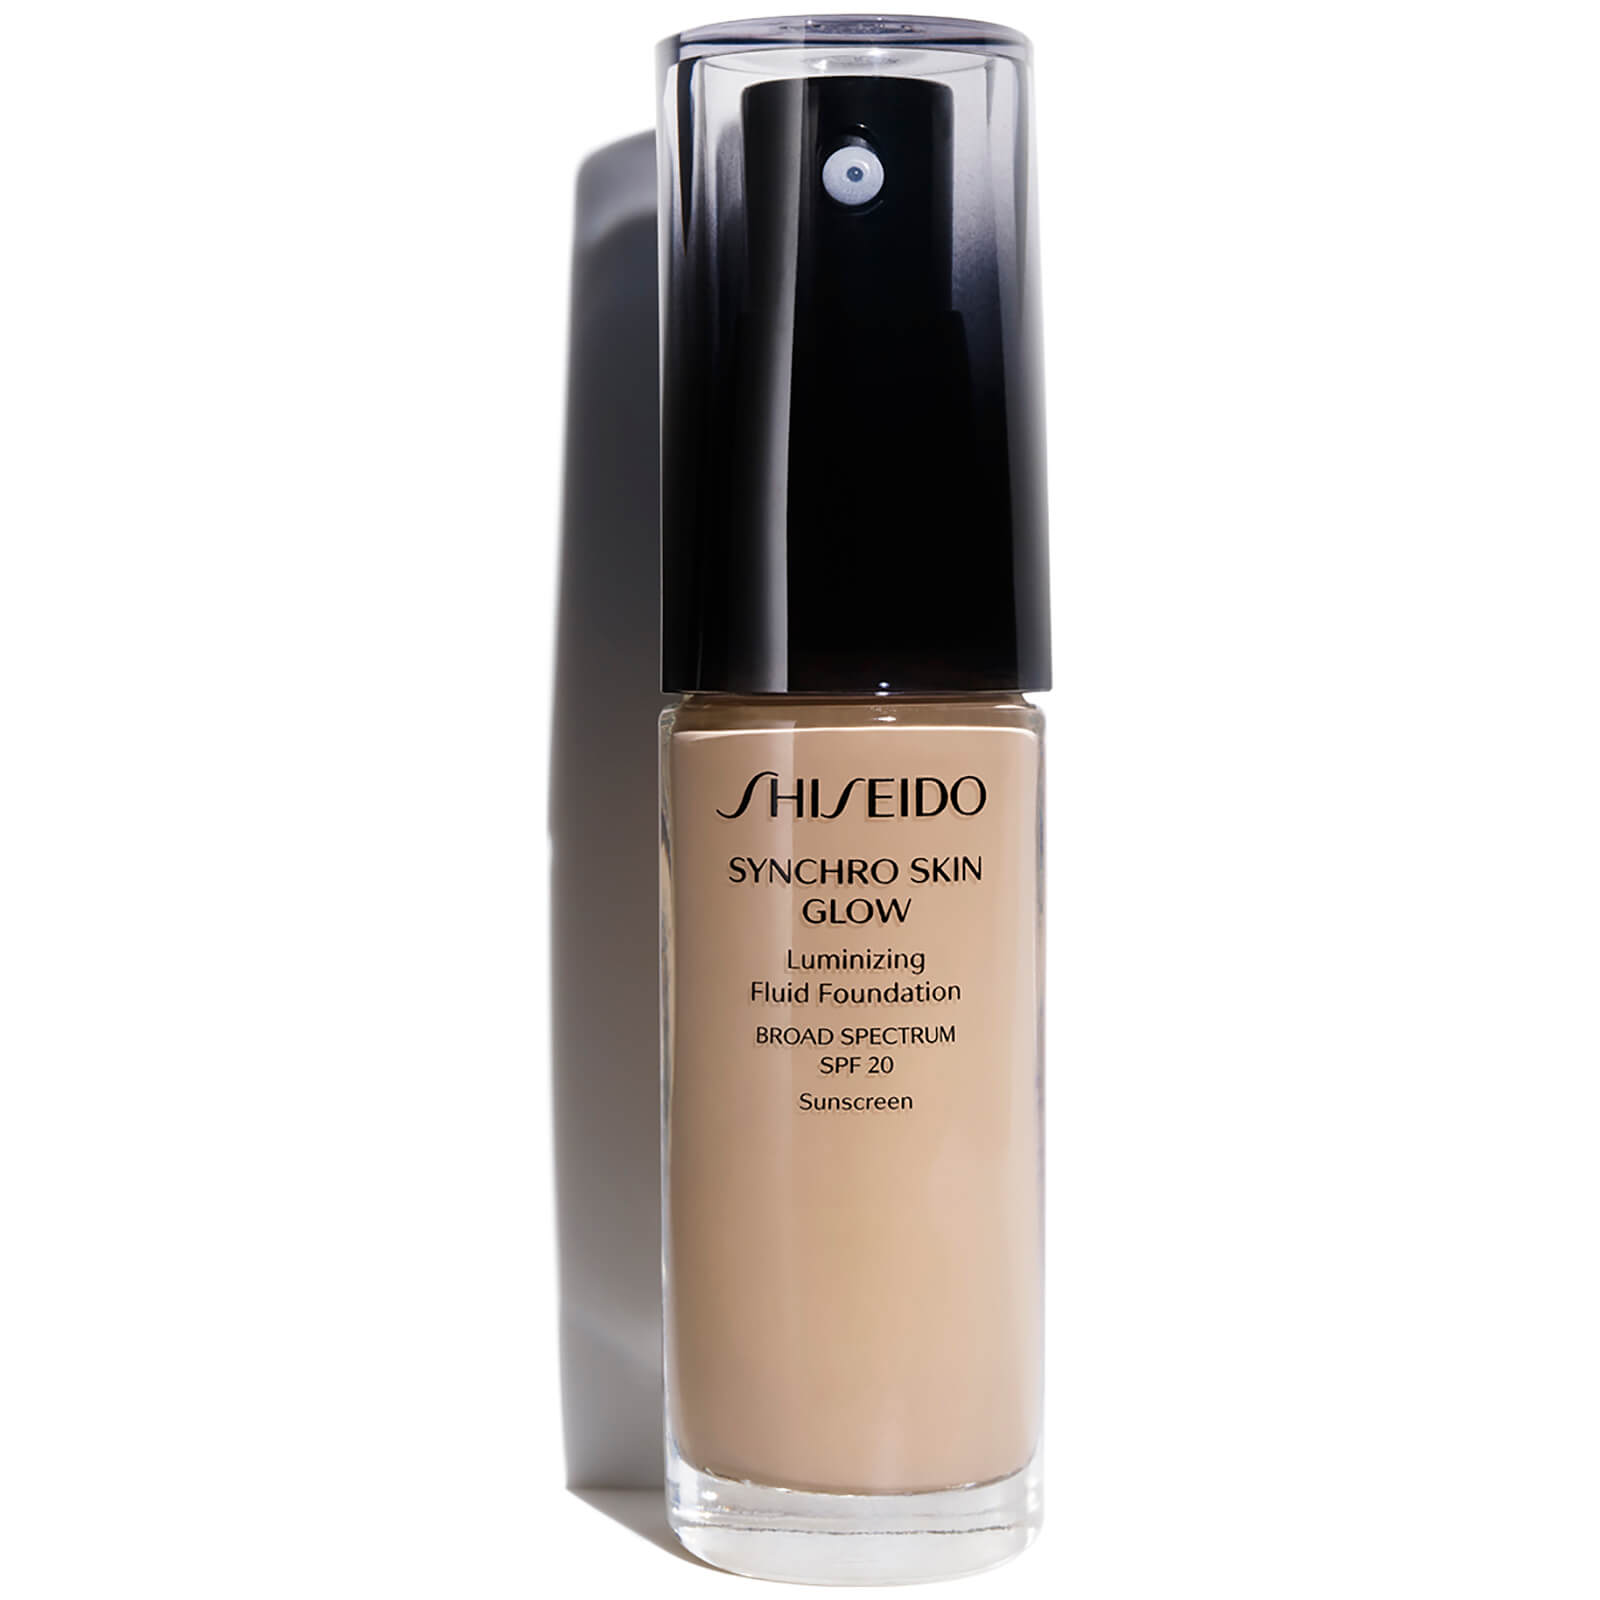 Shiseido Synchro Skin Glow Luminizing Foundation 30ml (Various Shades) - Neutral 3